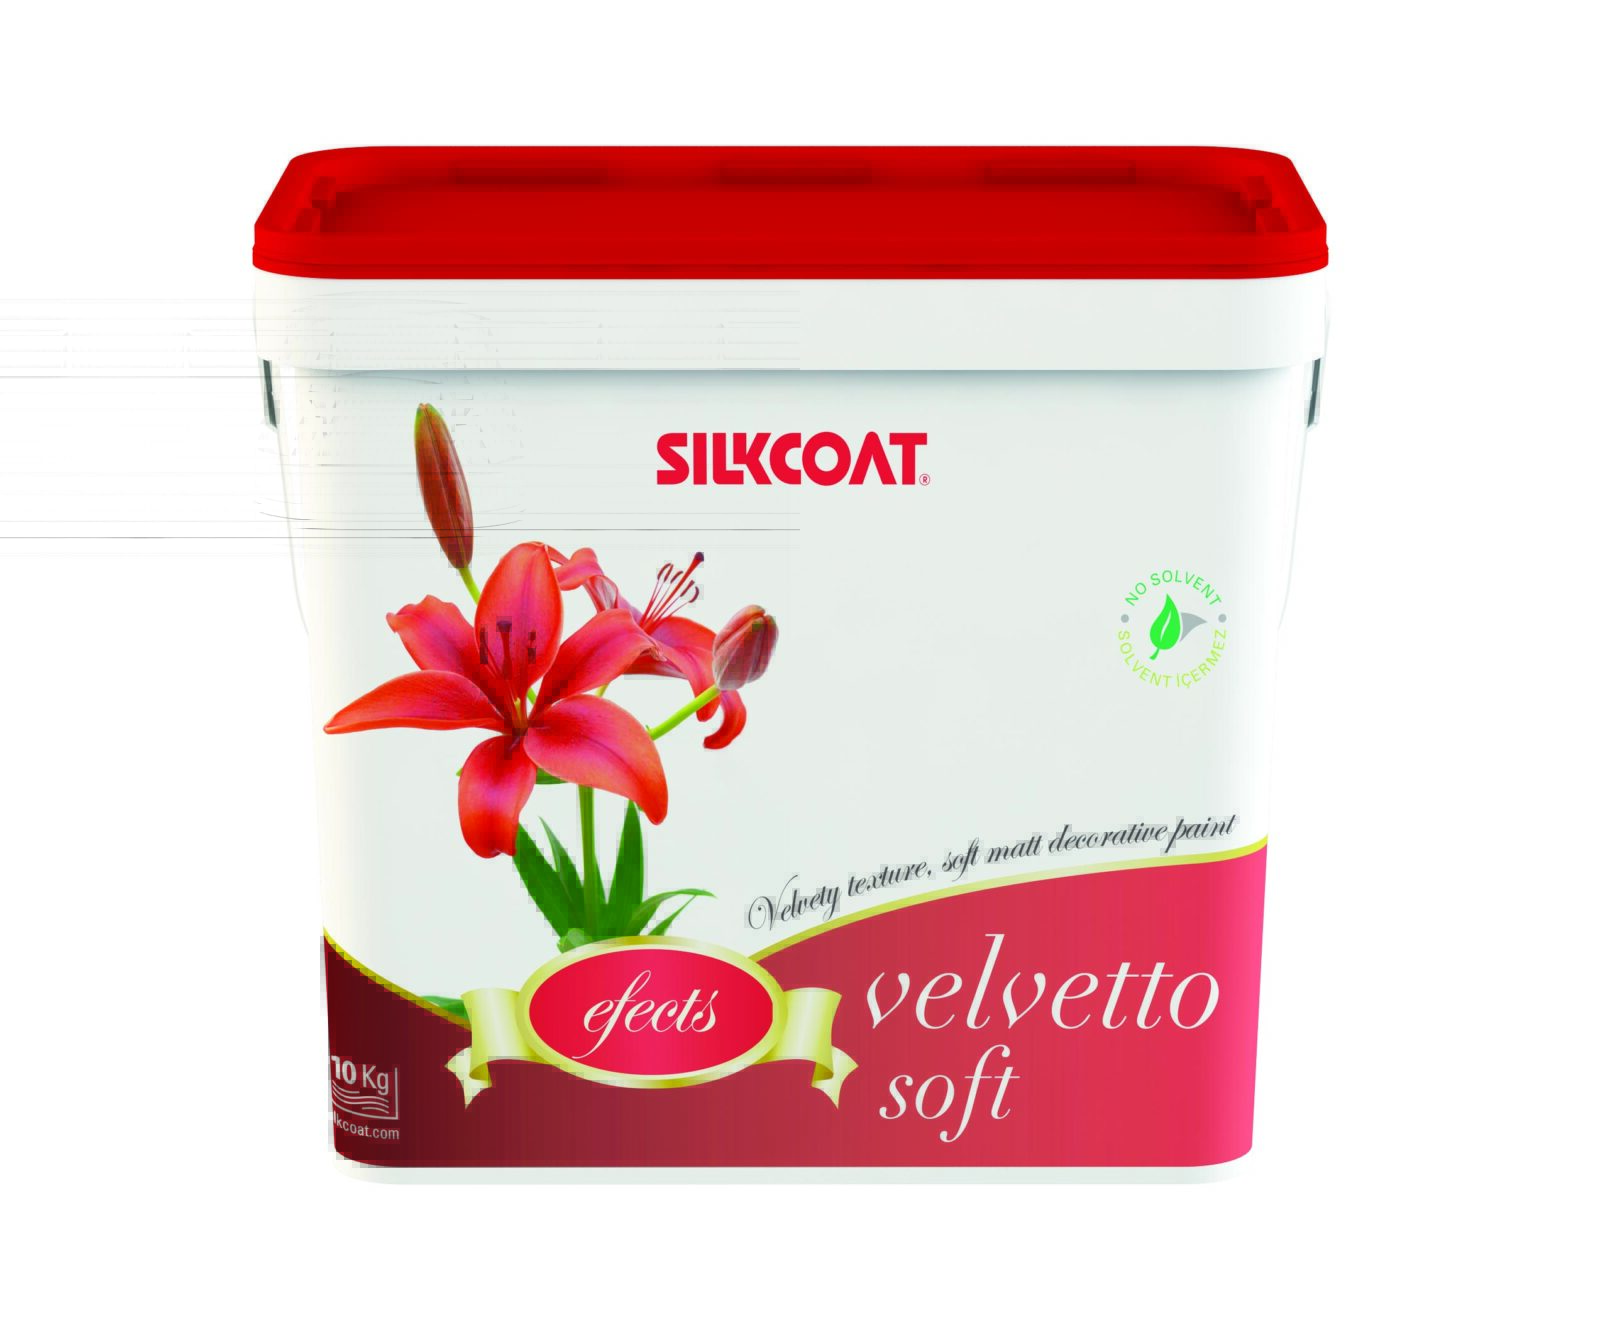 Velvetto Soft